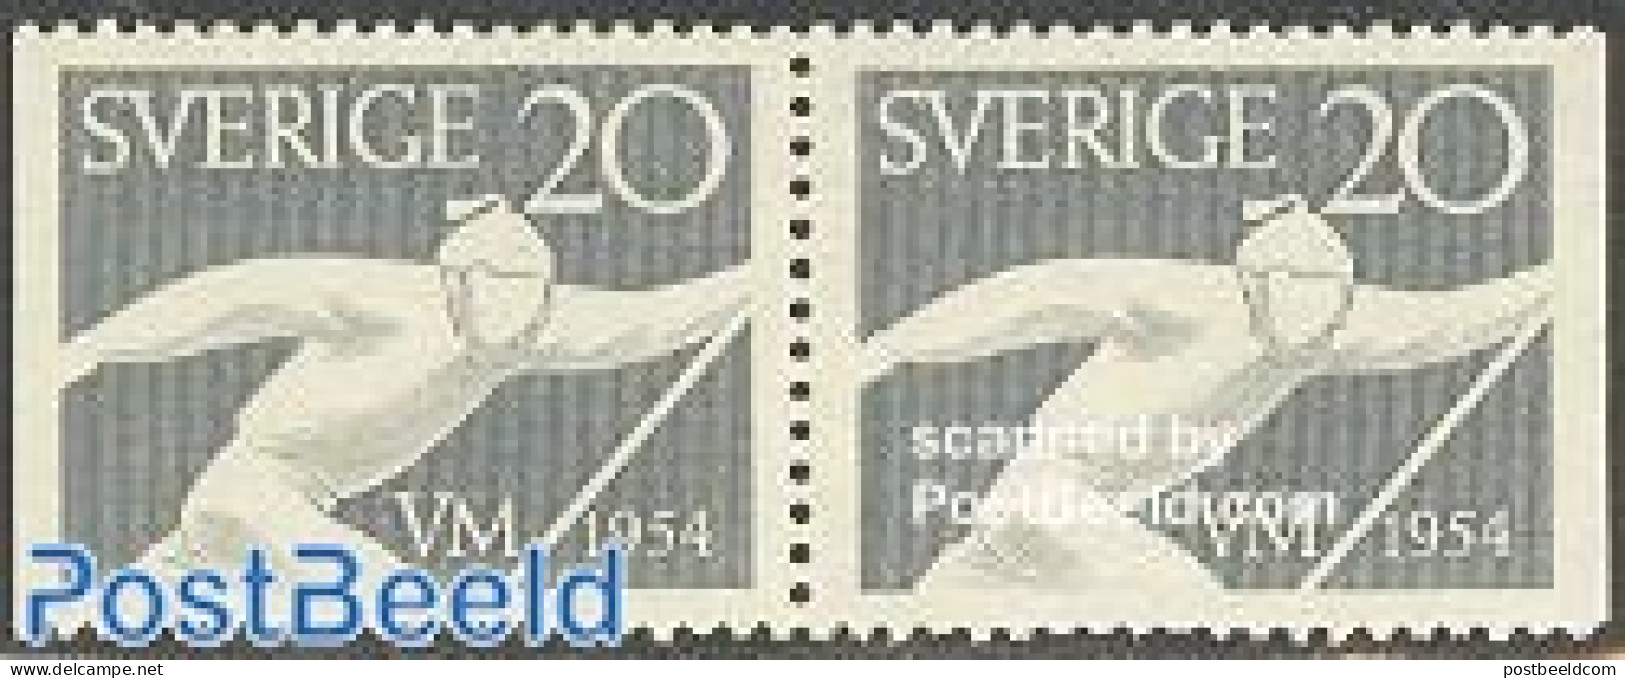 Sweden 1954 Skiing Booklet Pair, Mint NH, Sport - Skiing - Ungebraucht